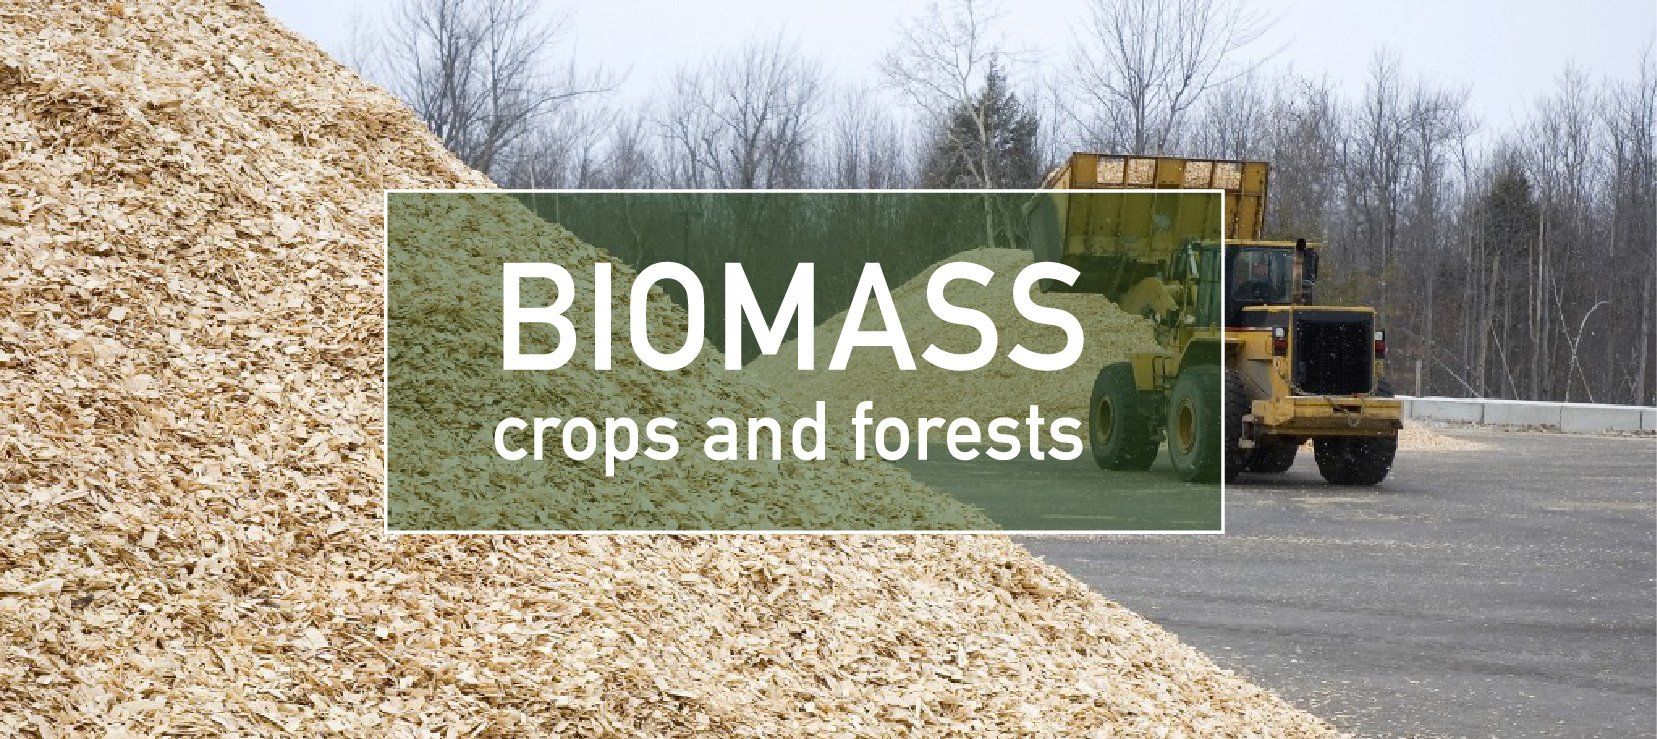 Biomass - pyrolysis applications